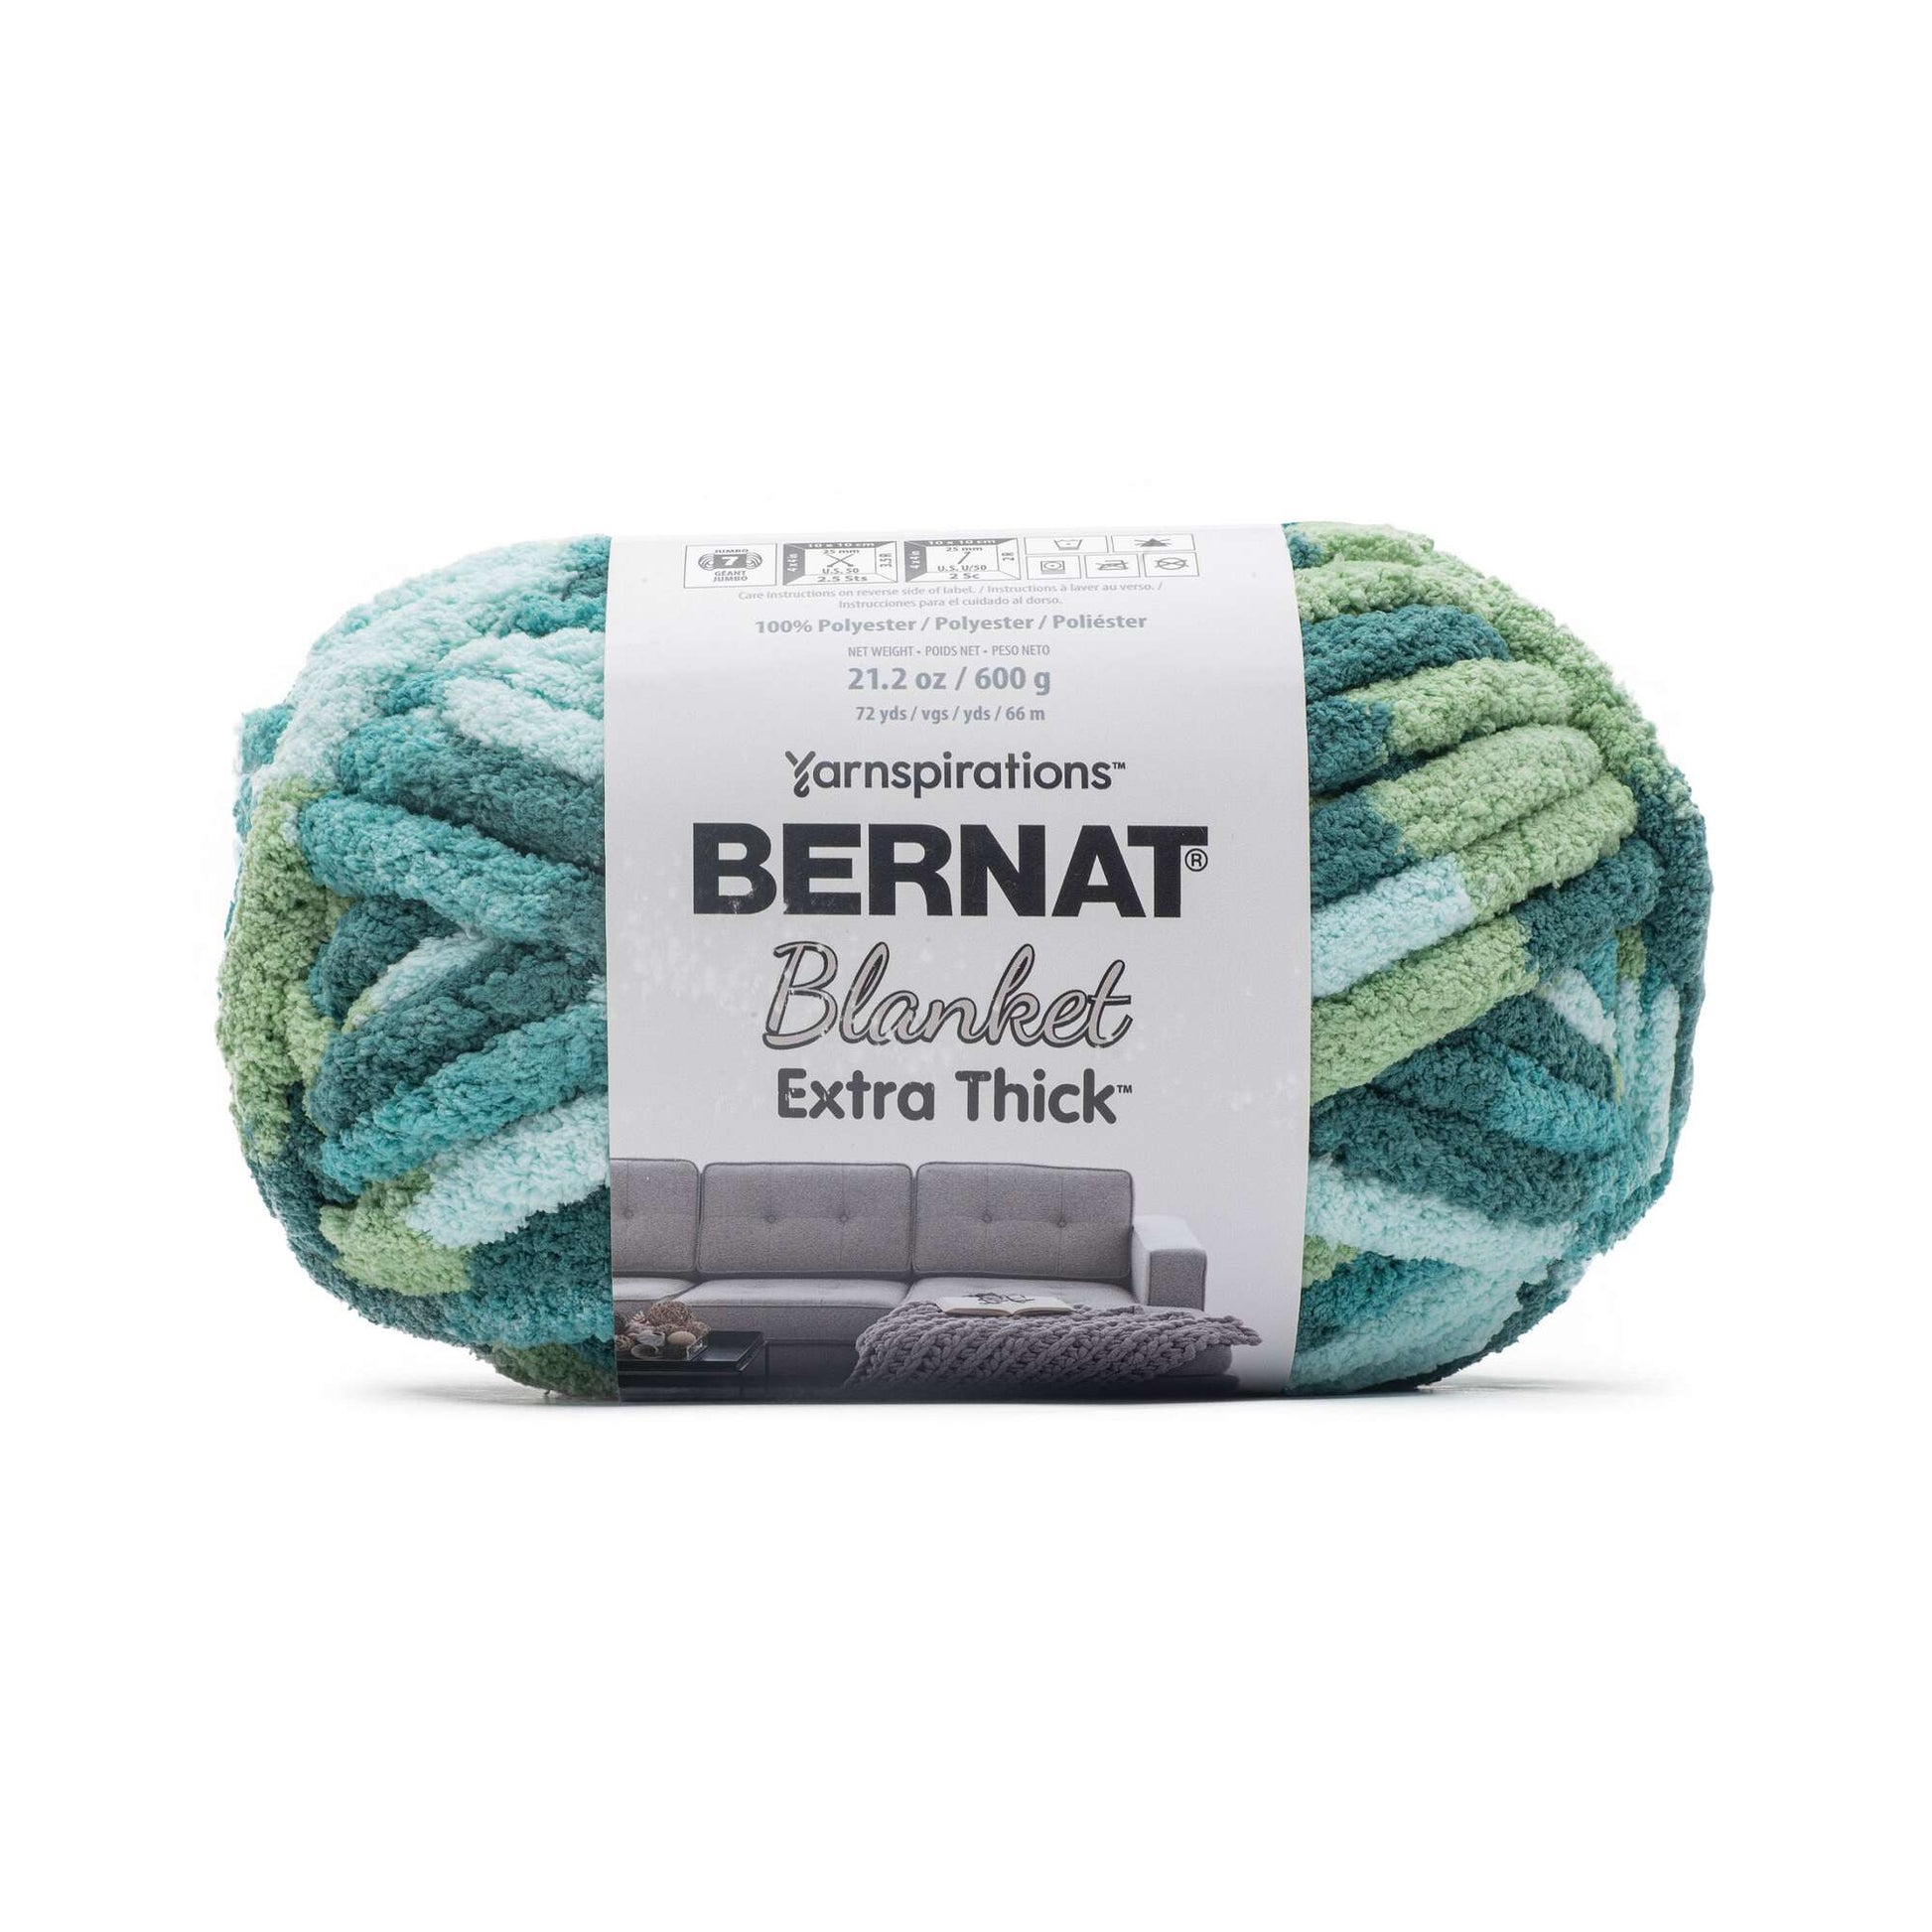 Bernat Blanket Extra Thick Yarn (600g/21.2oz) - Discontinued Shades Tropical Temptation